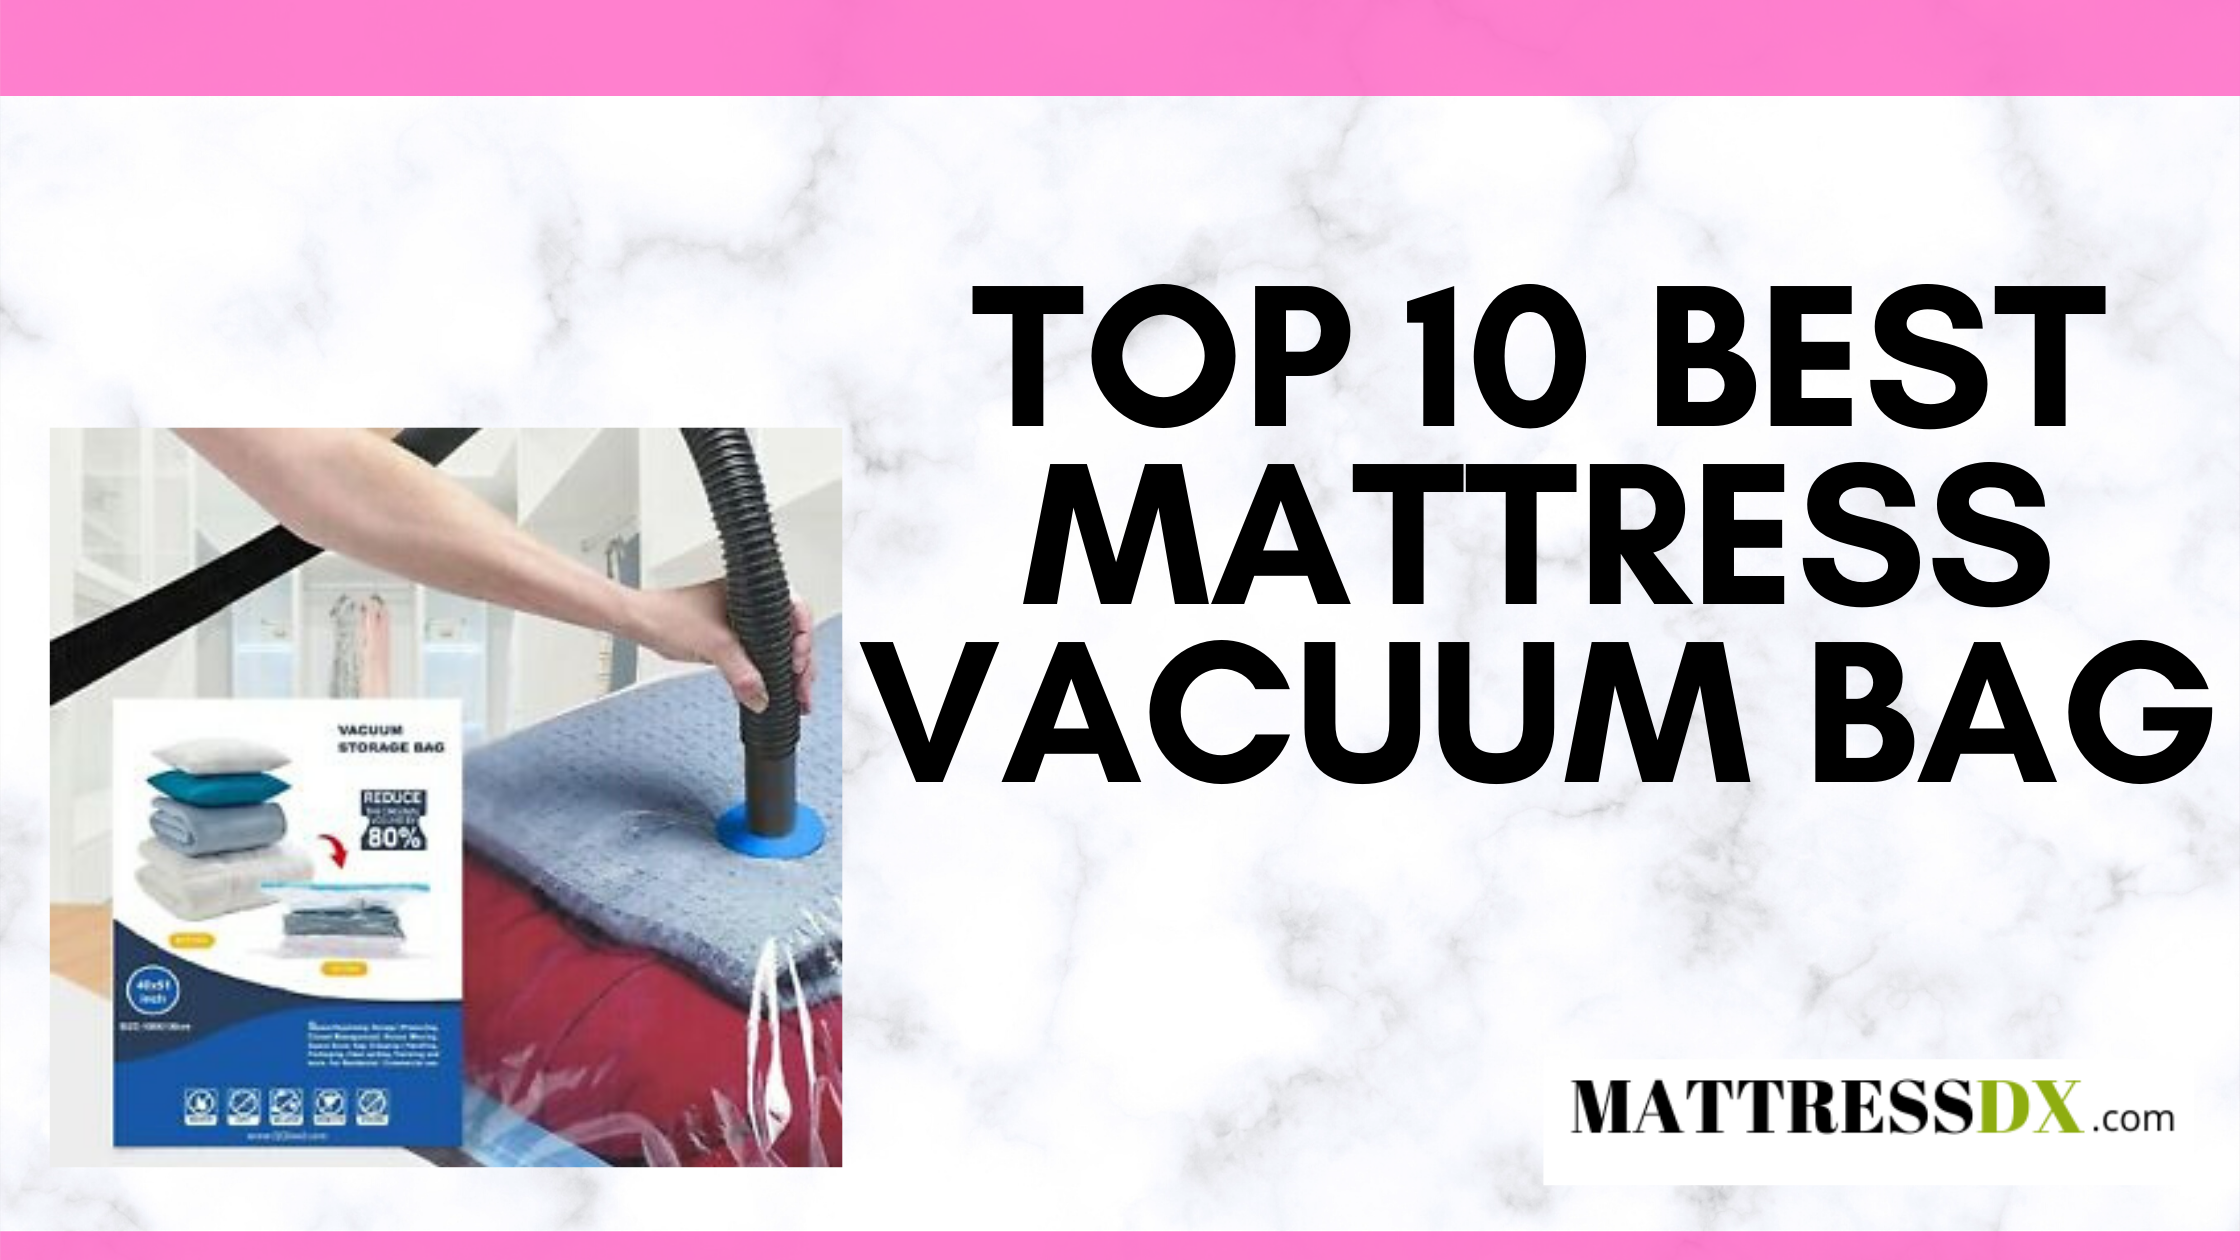 vacuum bag for bed mattress